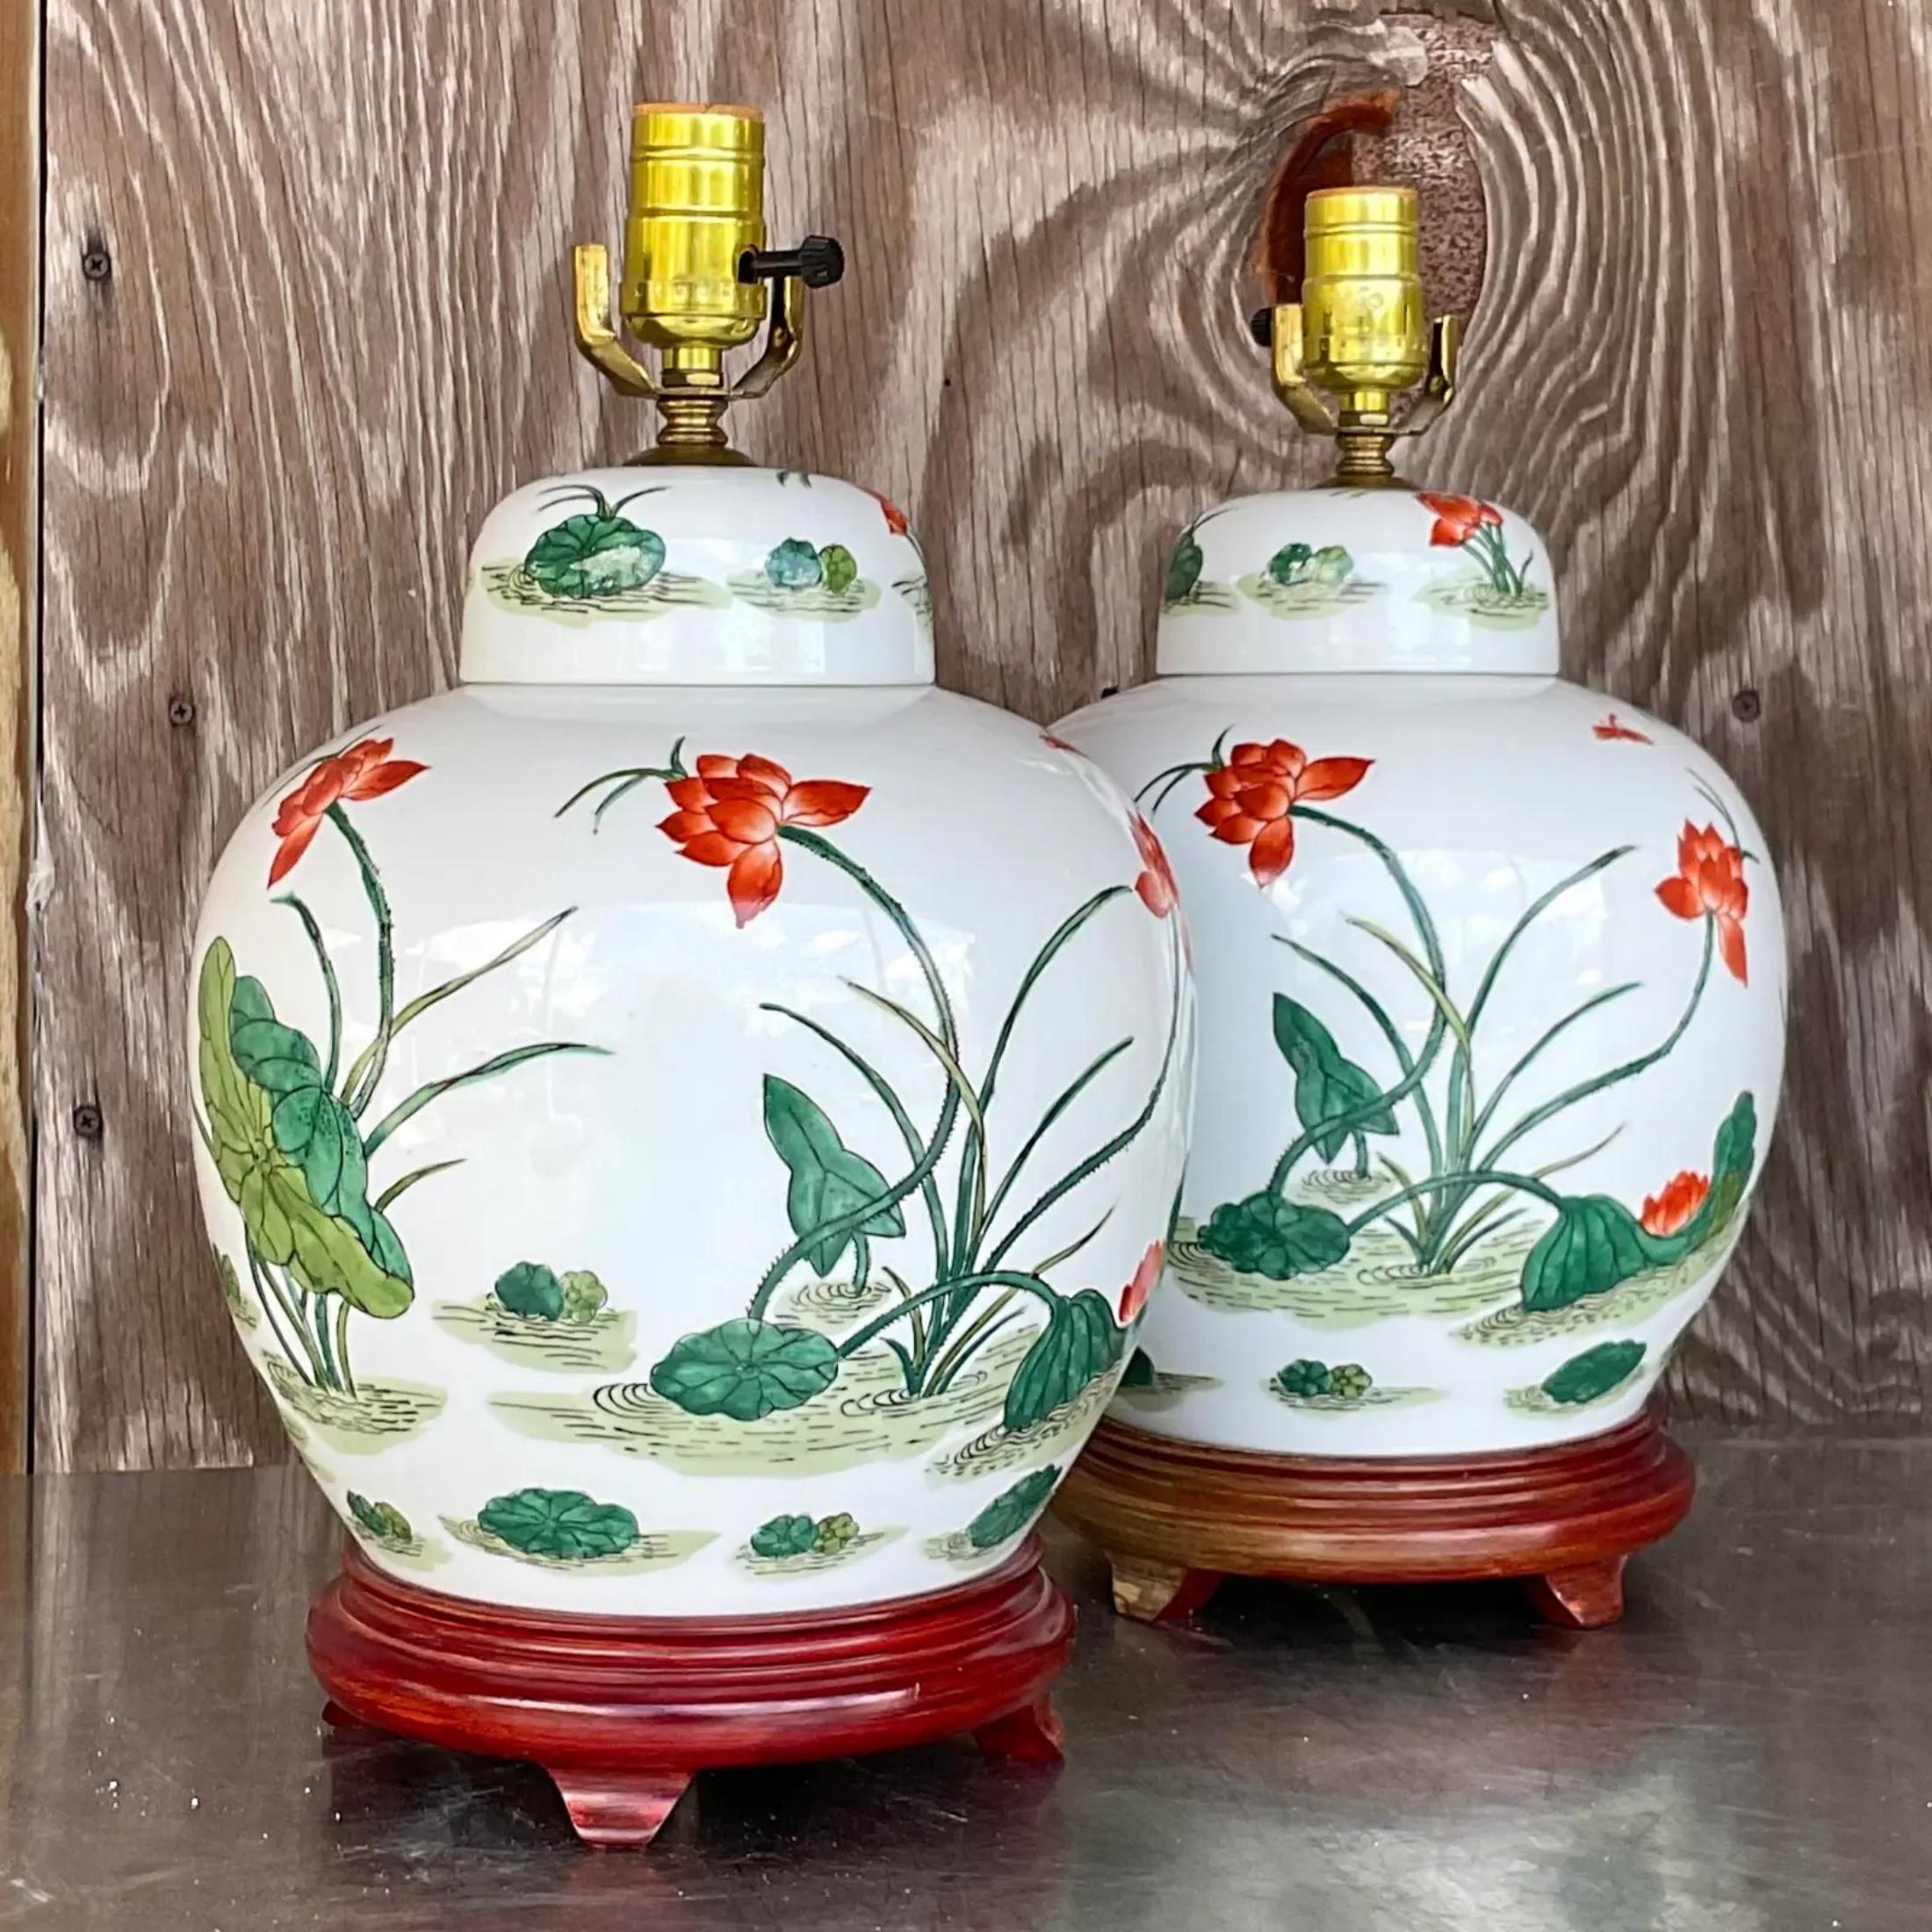 American Vintage Asian Glazed Ceramic Ginger Jar Lamps - a Pair For Sale